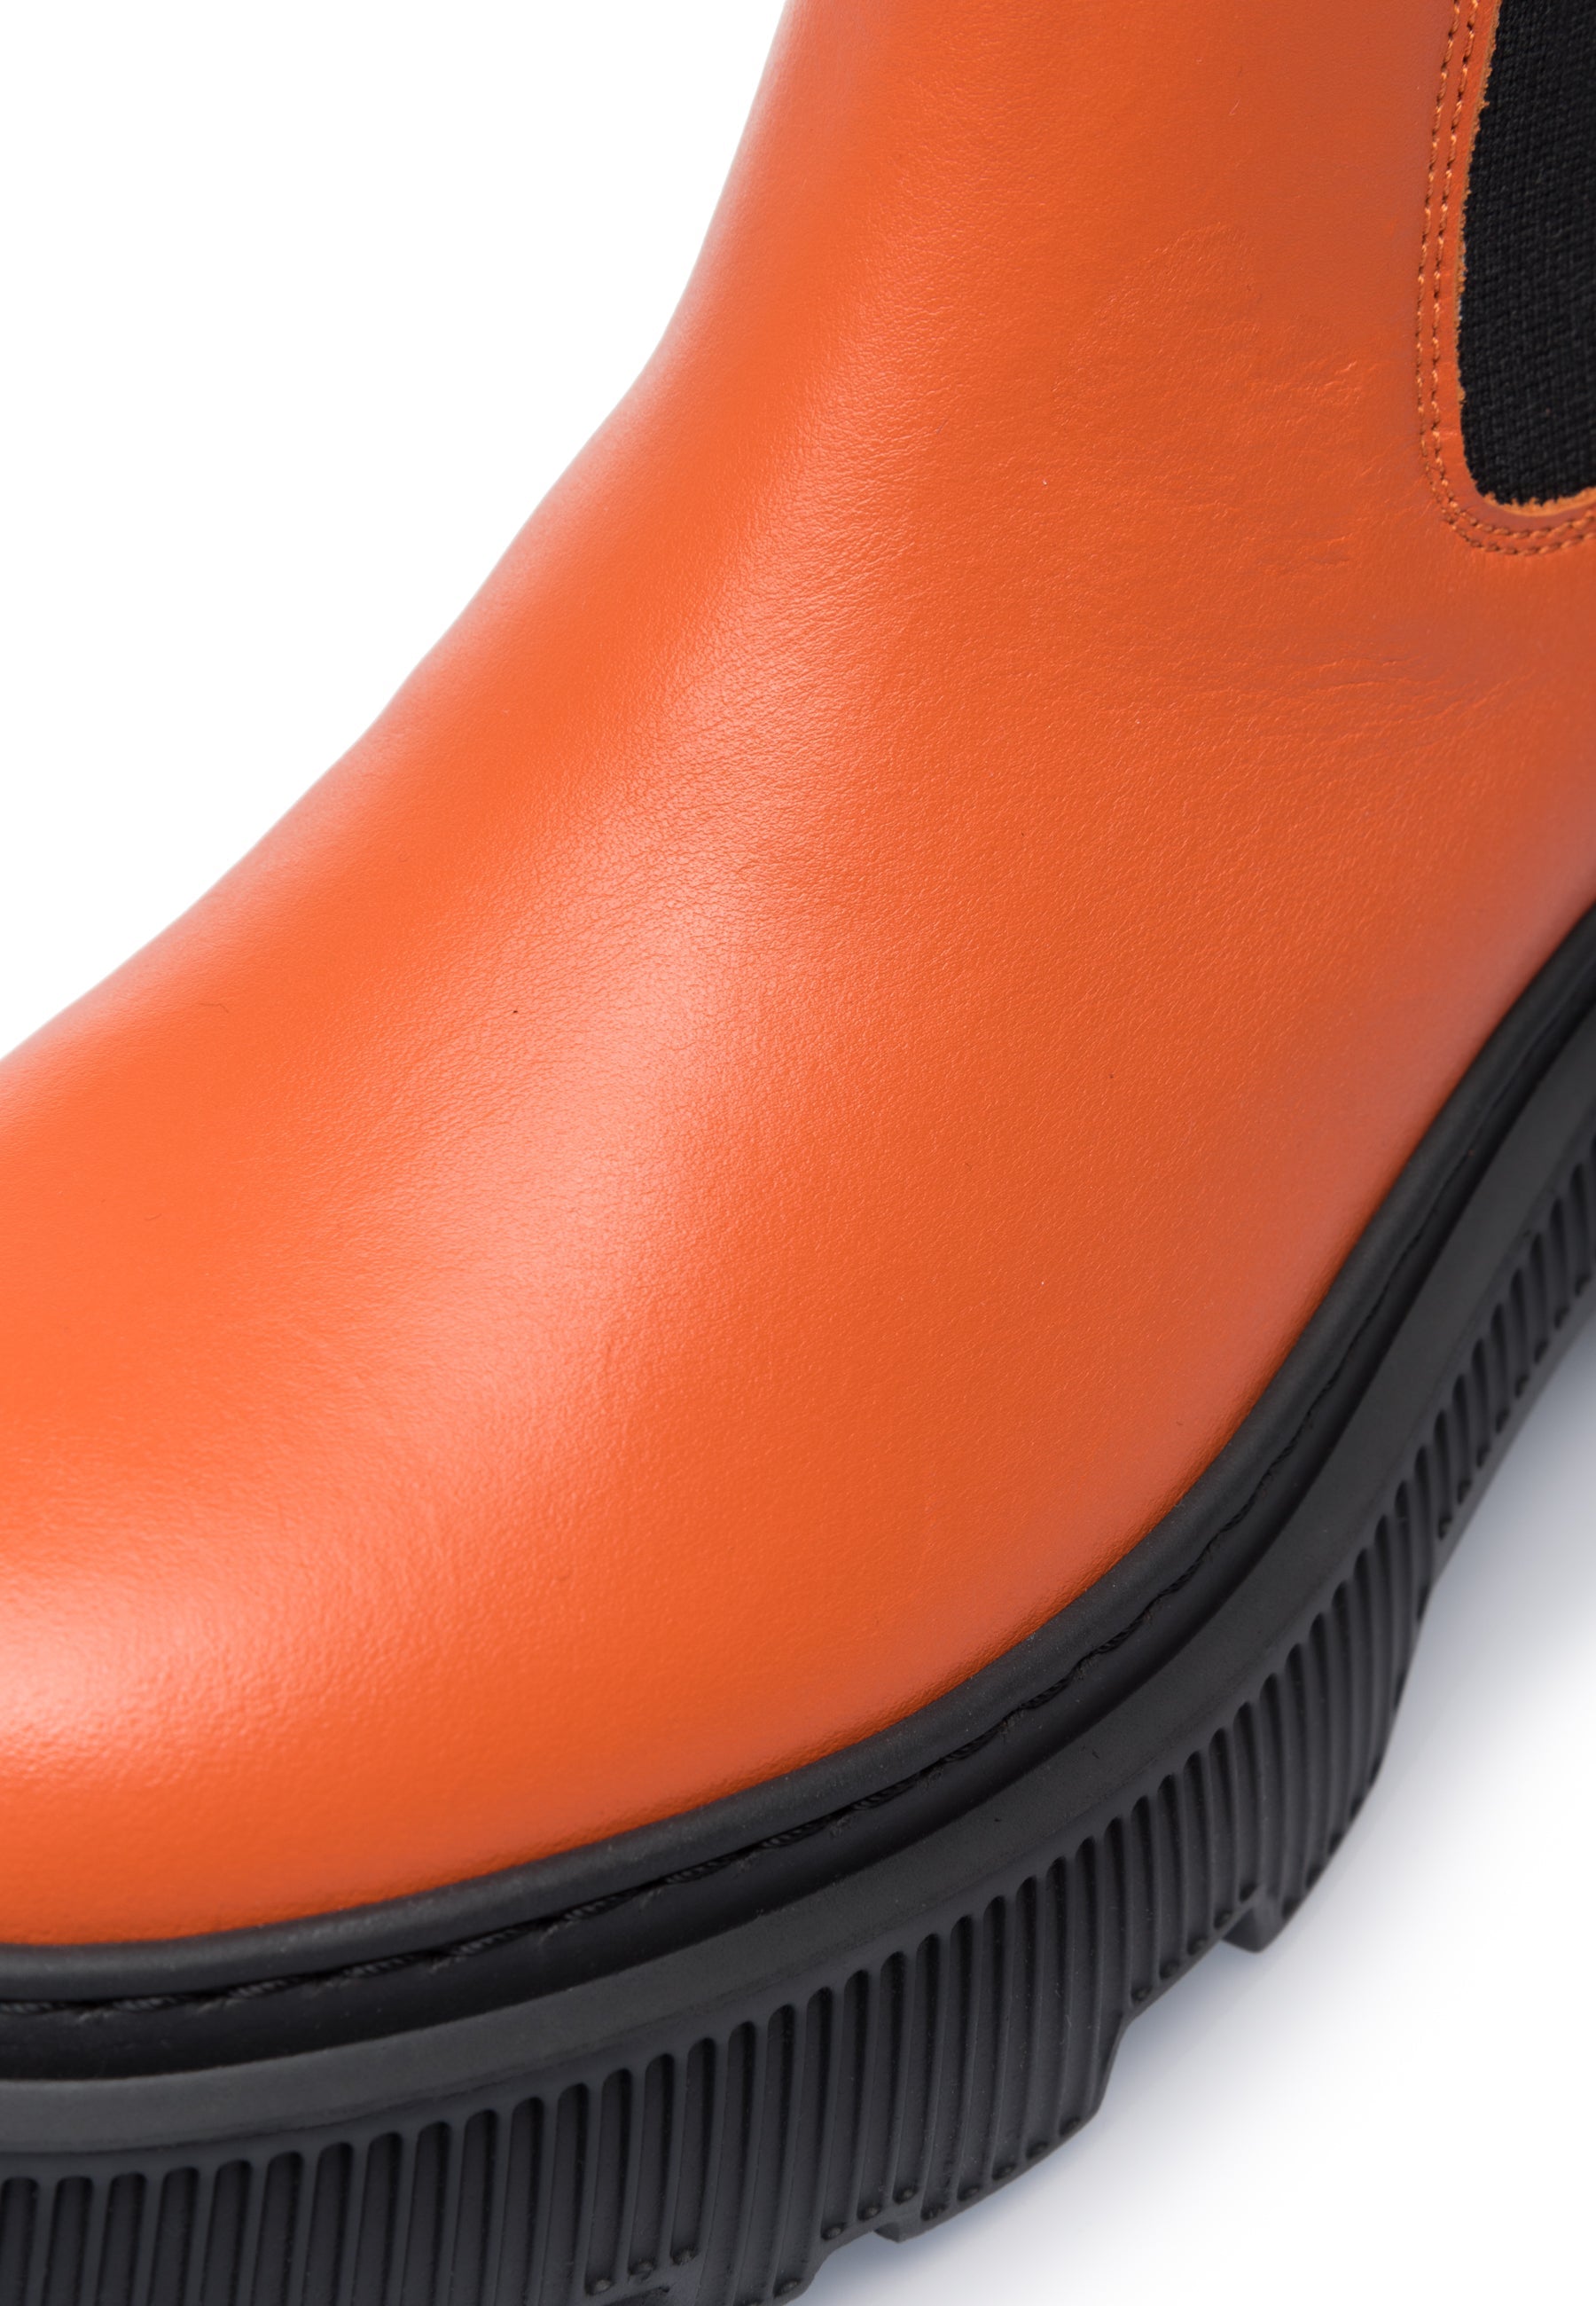 Trixy Orange Chelsea Boots LAST1632 - 6